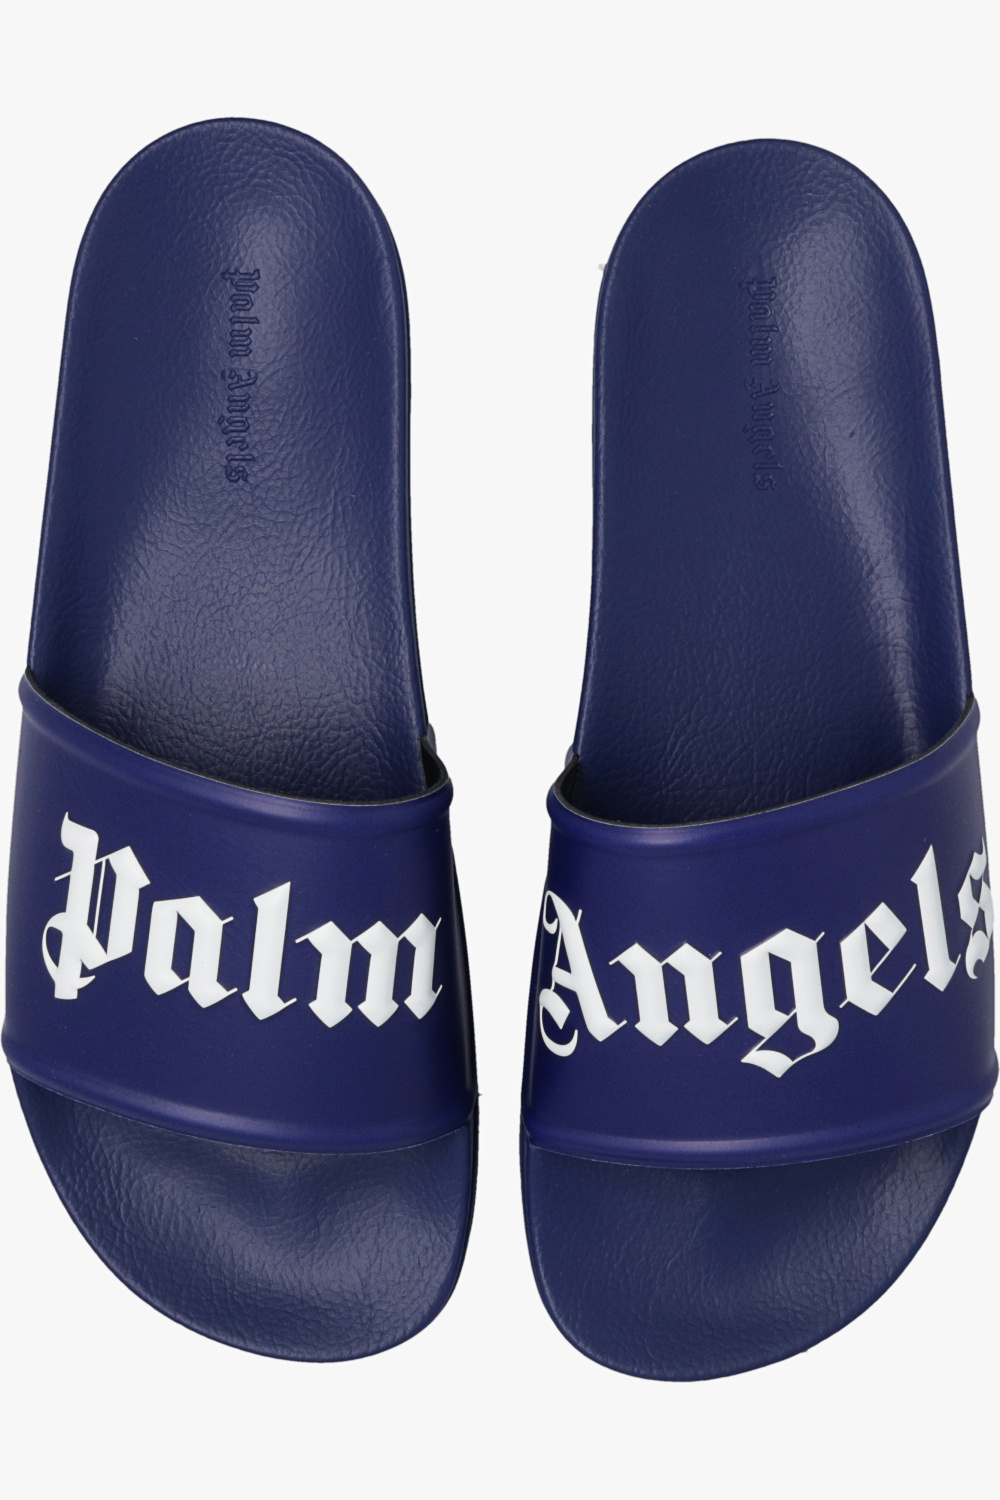 Palm Angels Adidas madrid shoes auburn mesa brown fx5629